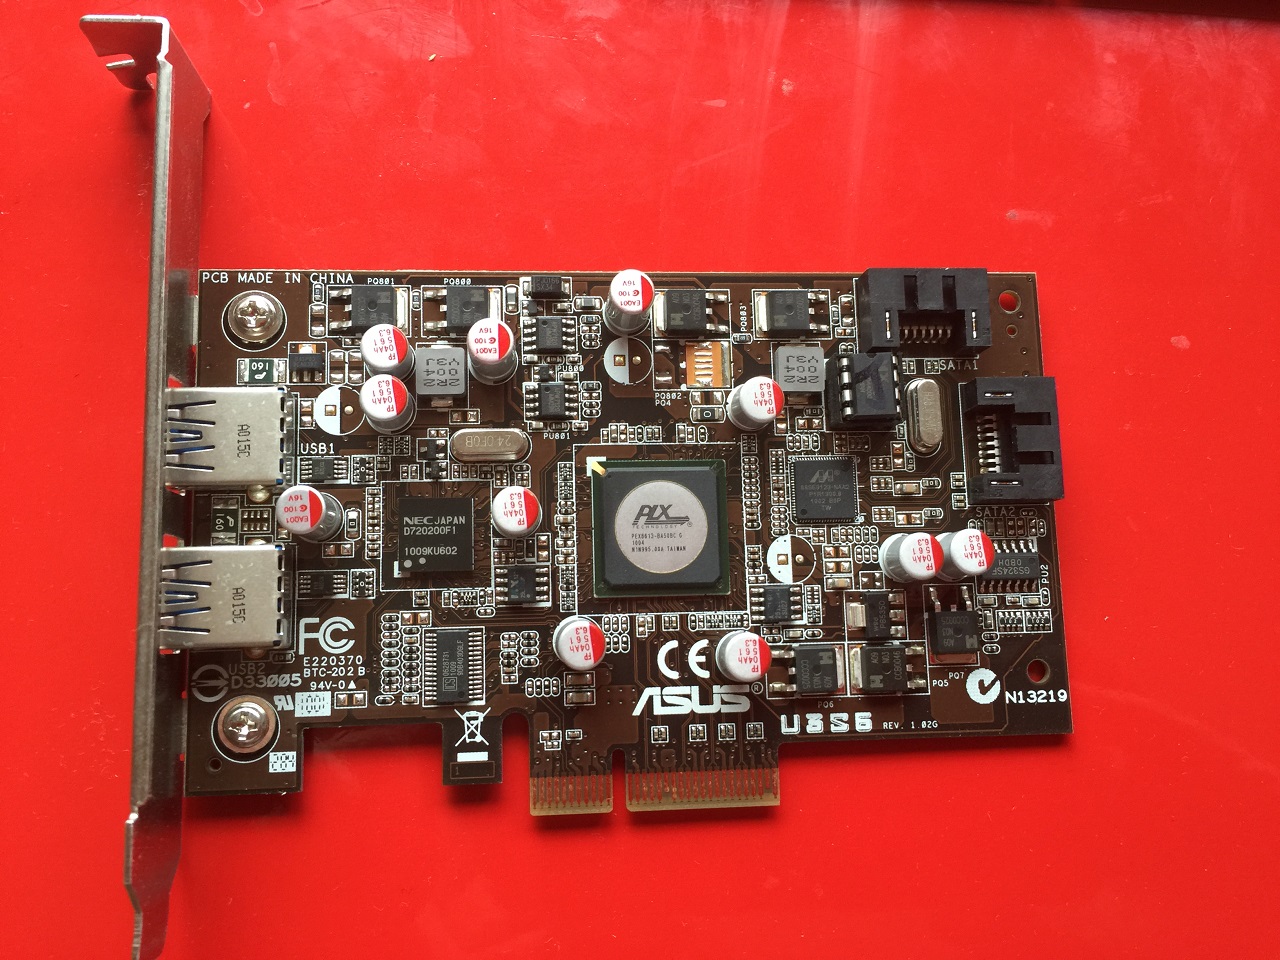  3 ADET SEAGTE 7200RPM  HDD,ASUS U3S6 USB3.0 & SATA3 CARD